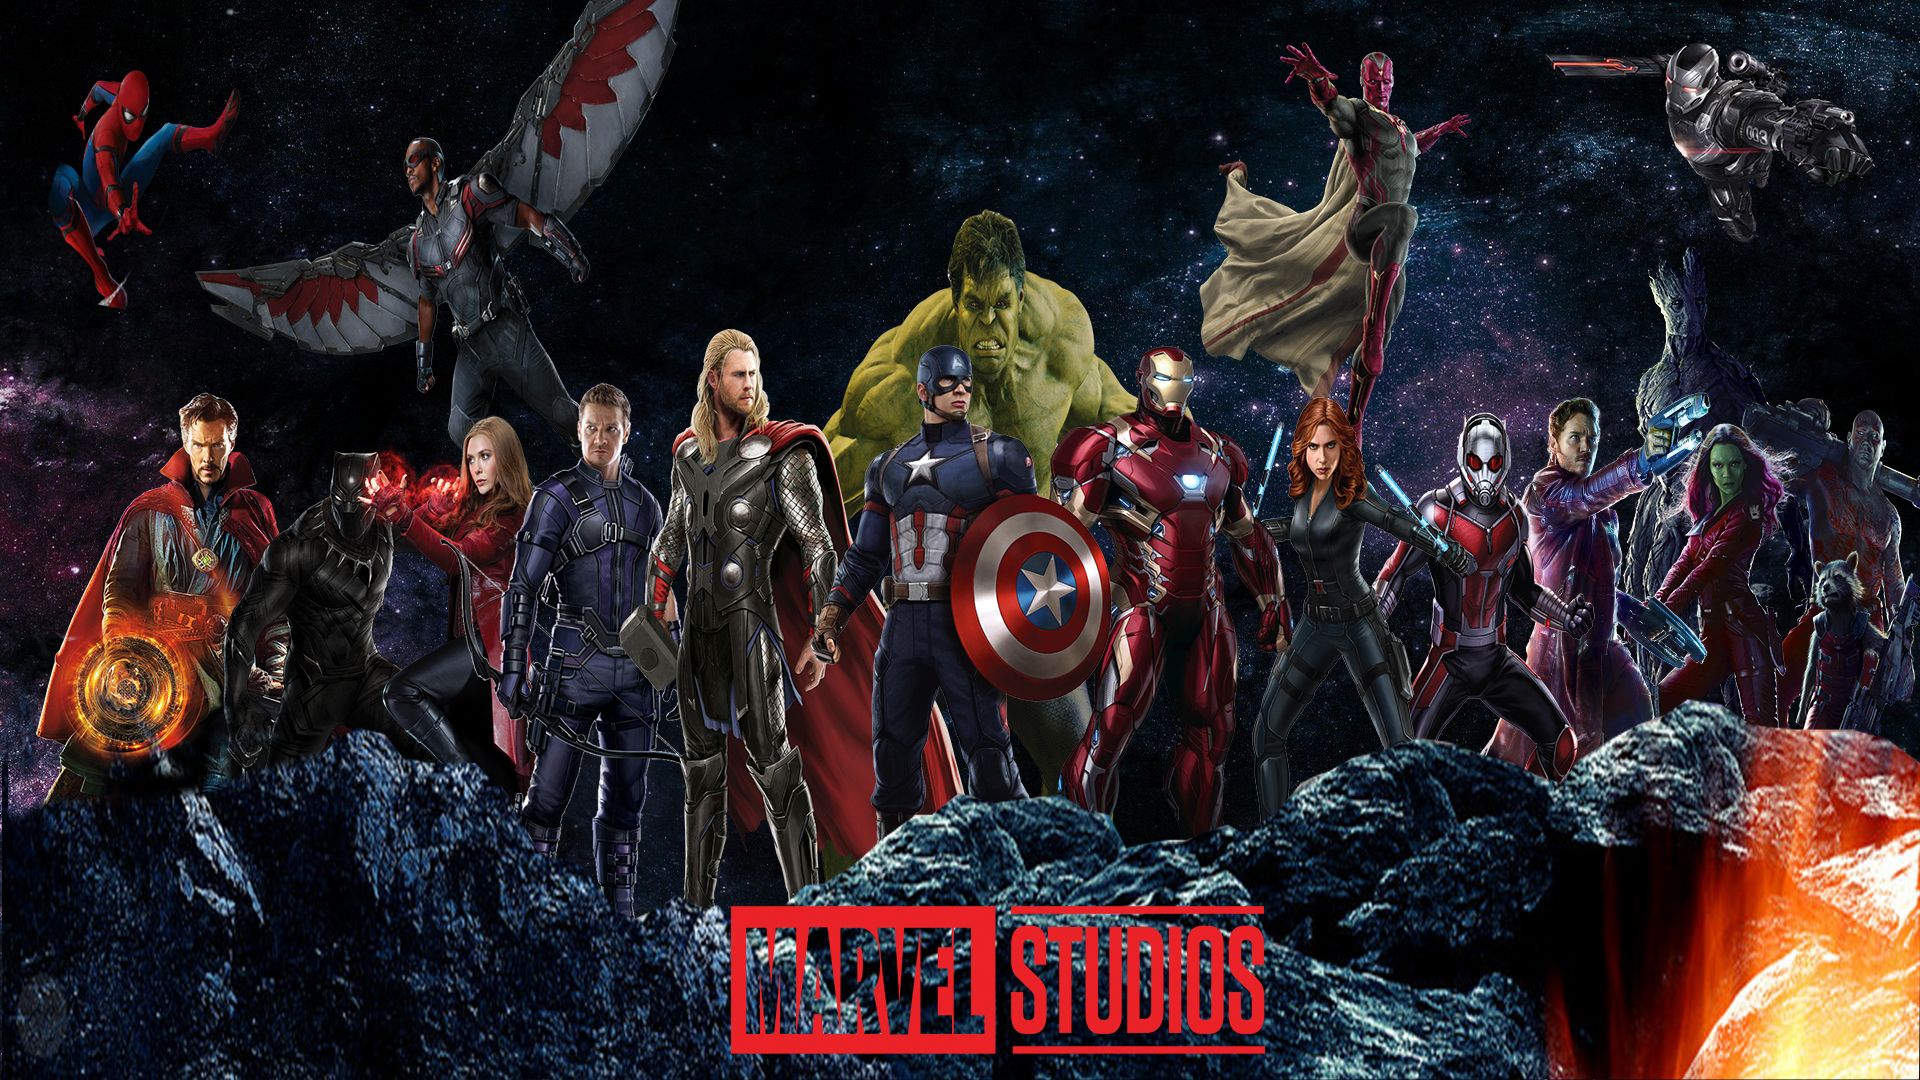 Marvel Cinematic Universe Wallpaper